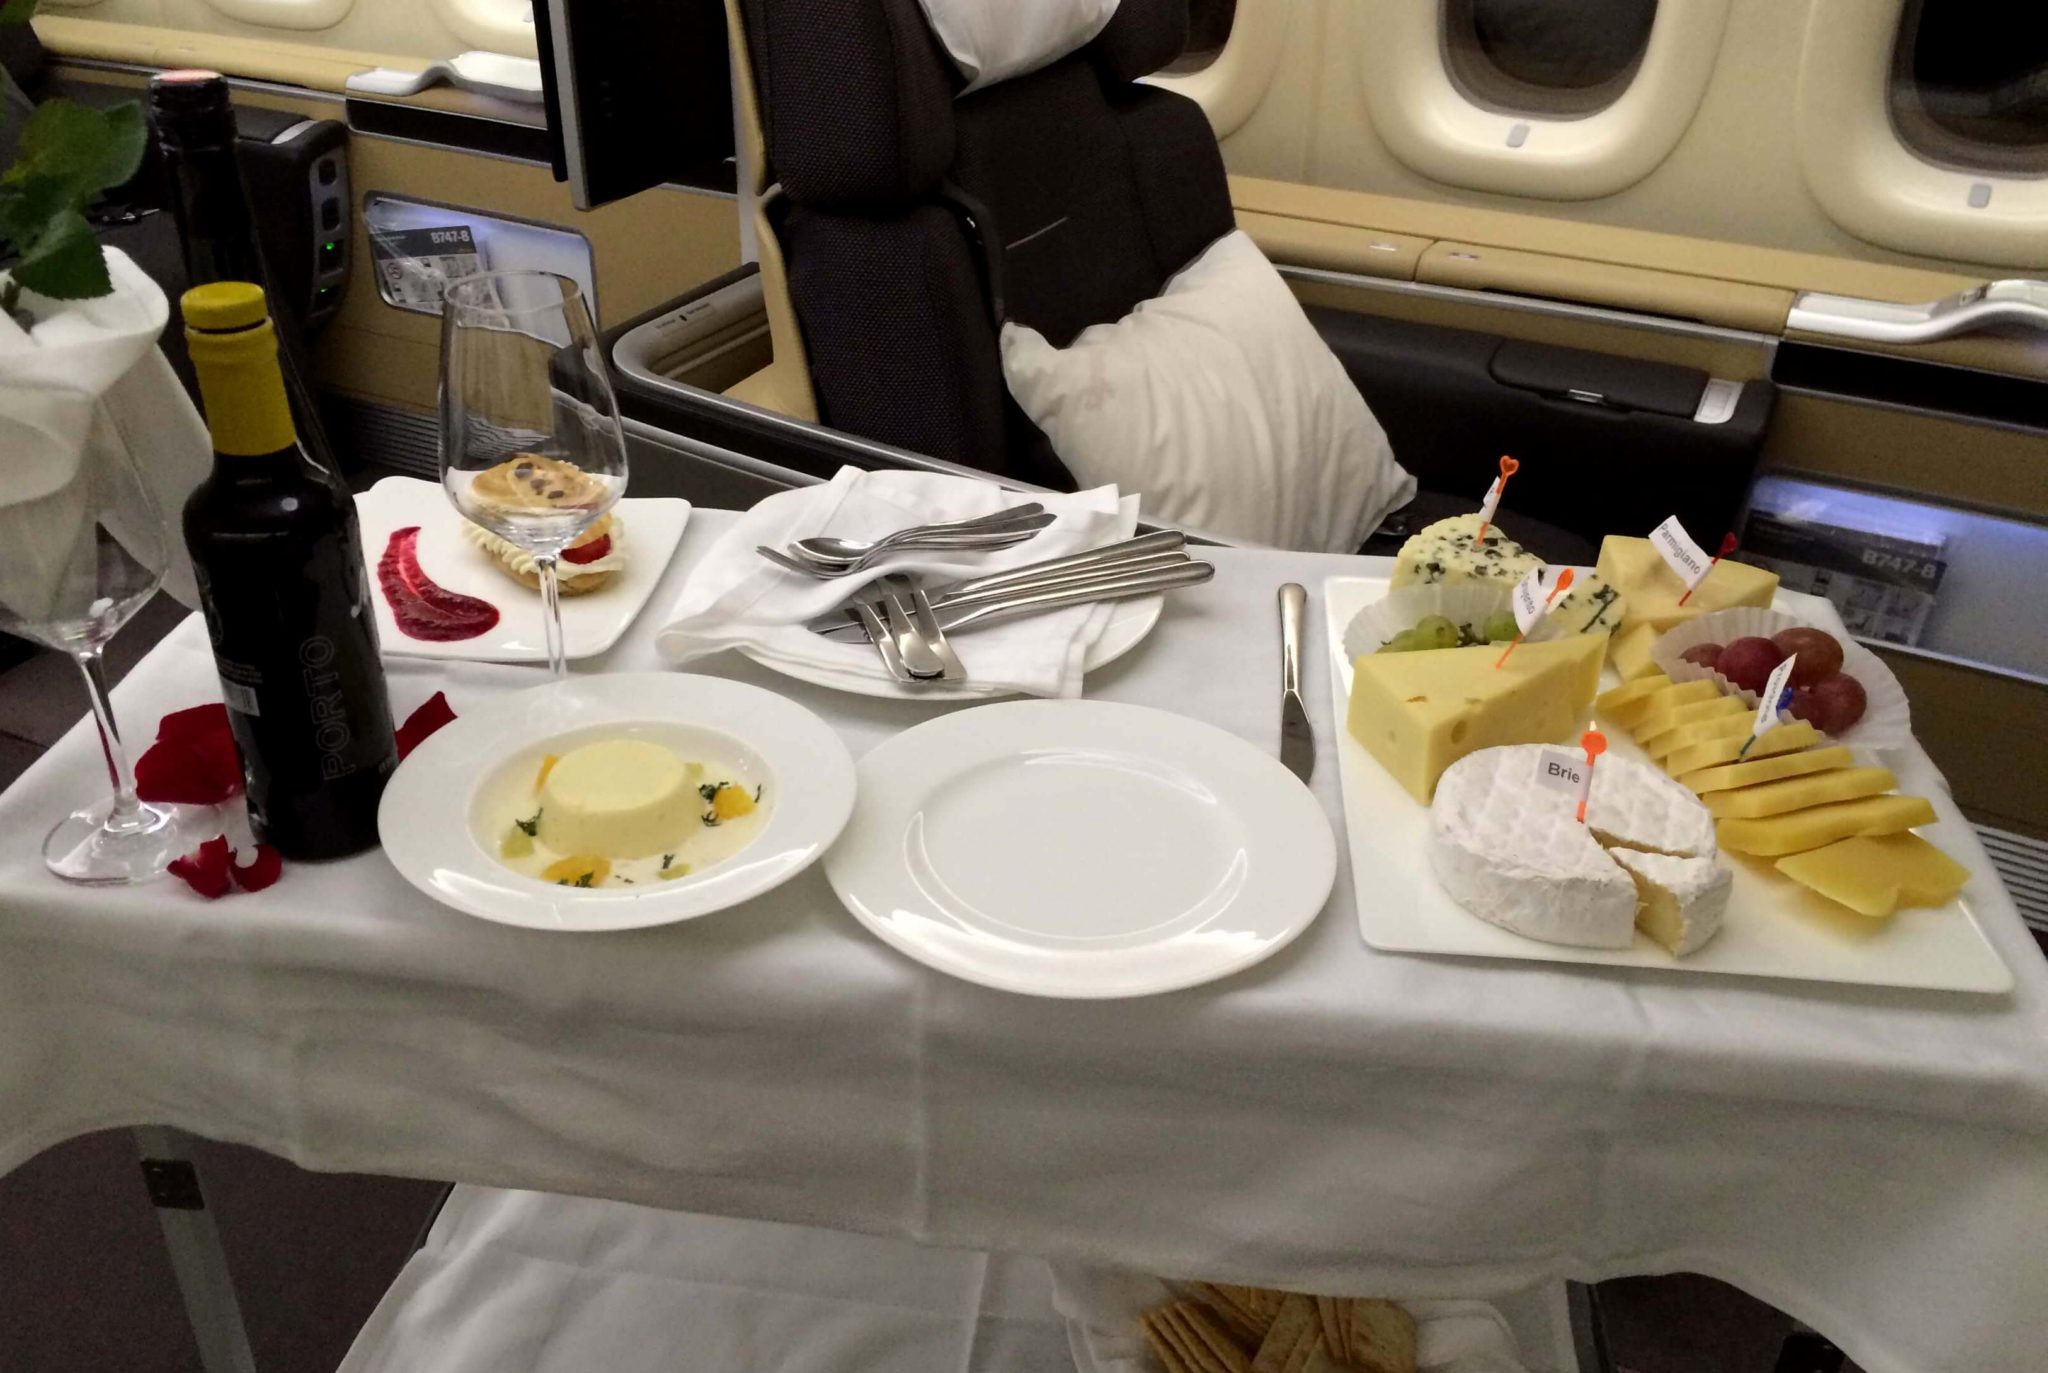 Postres y quesos, Lufthansa first class